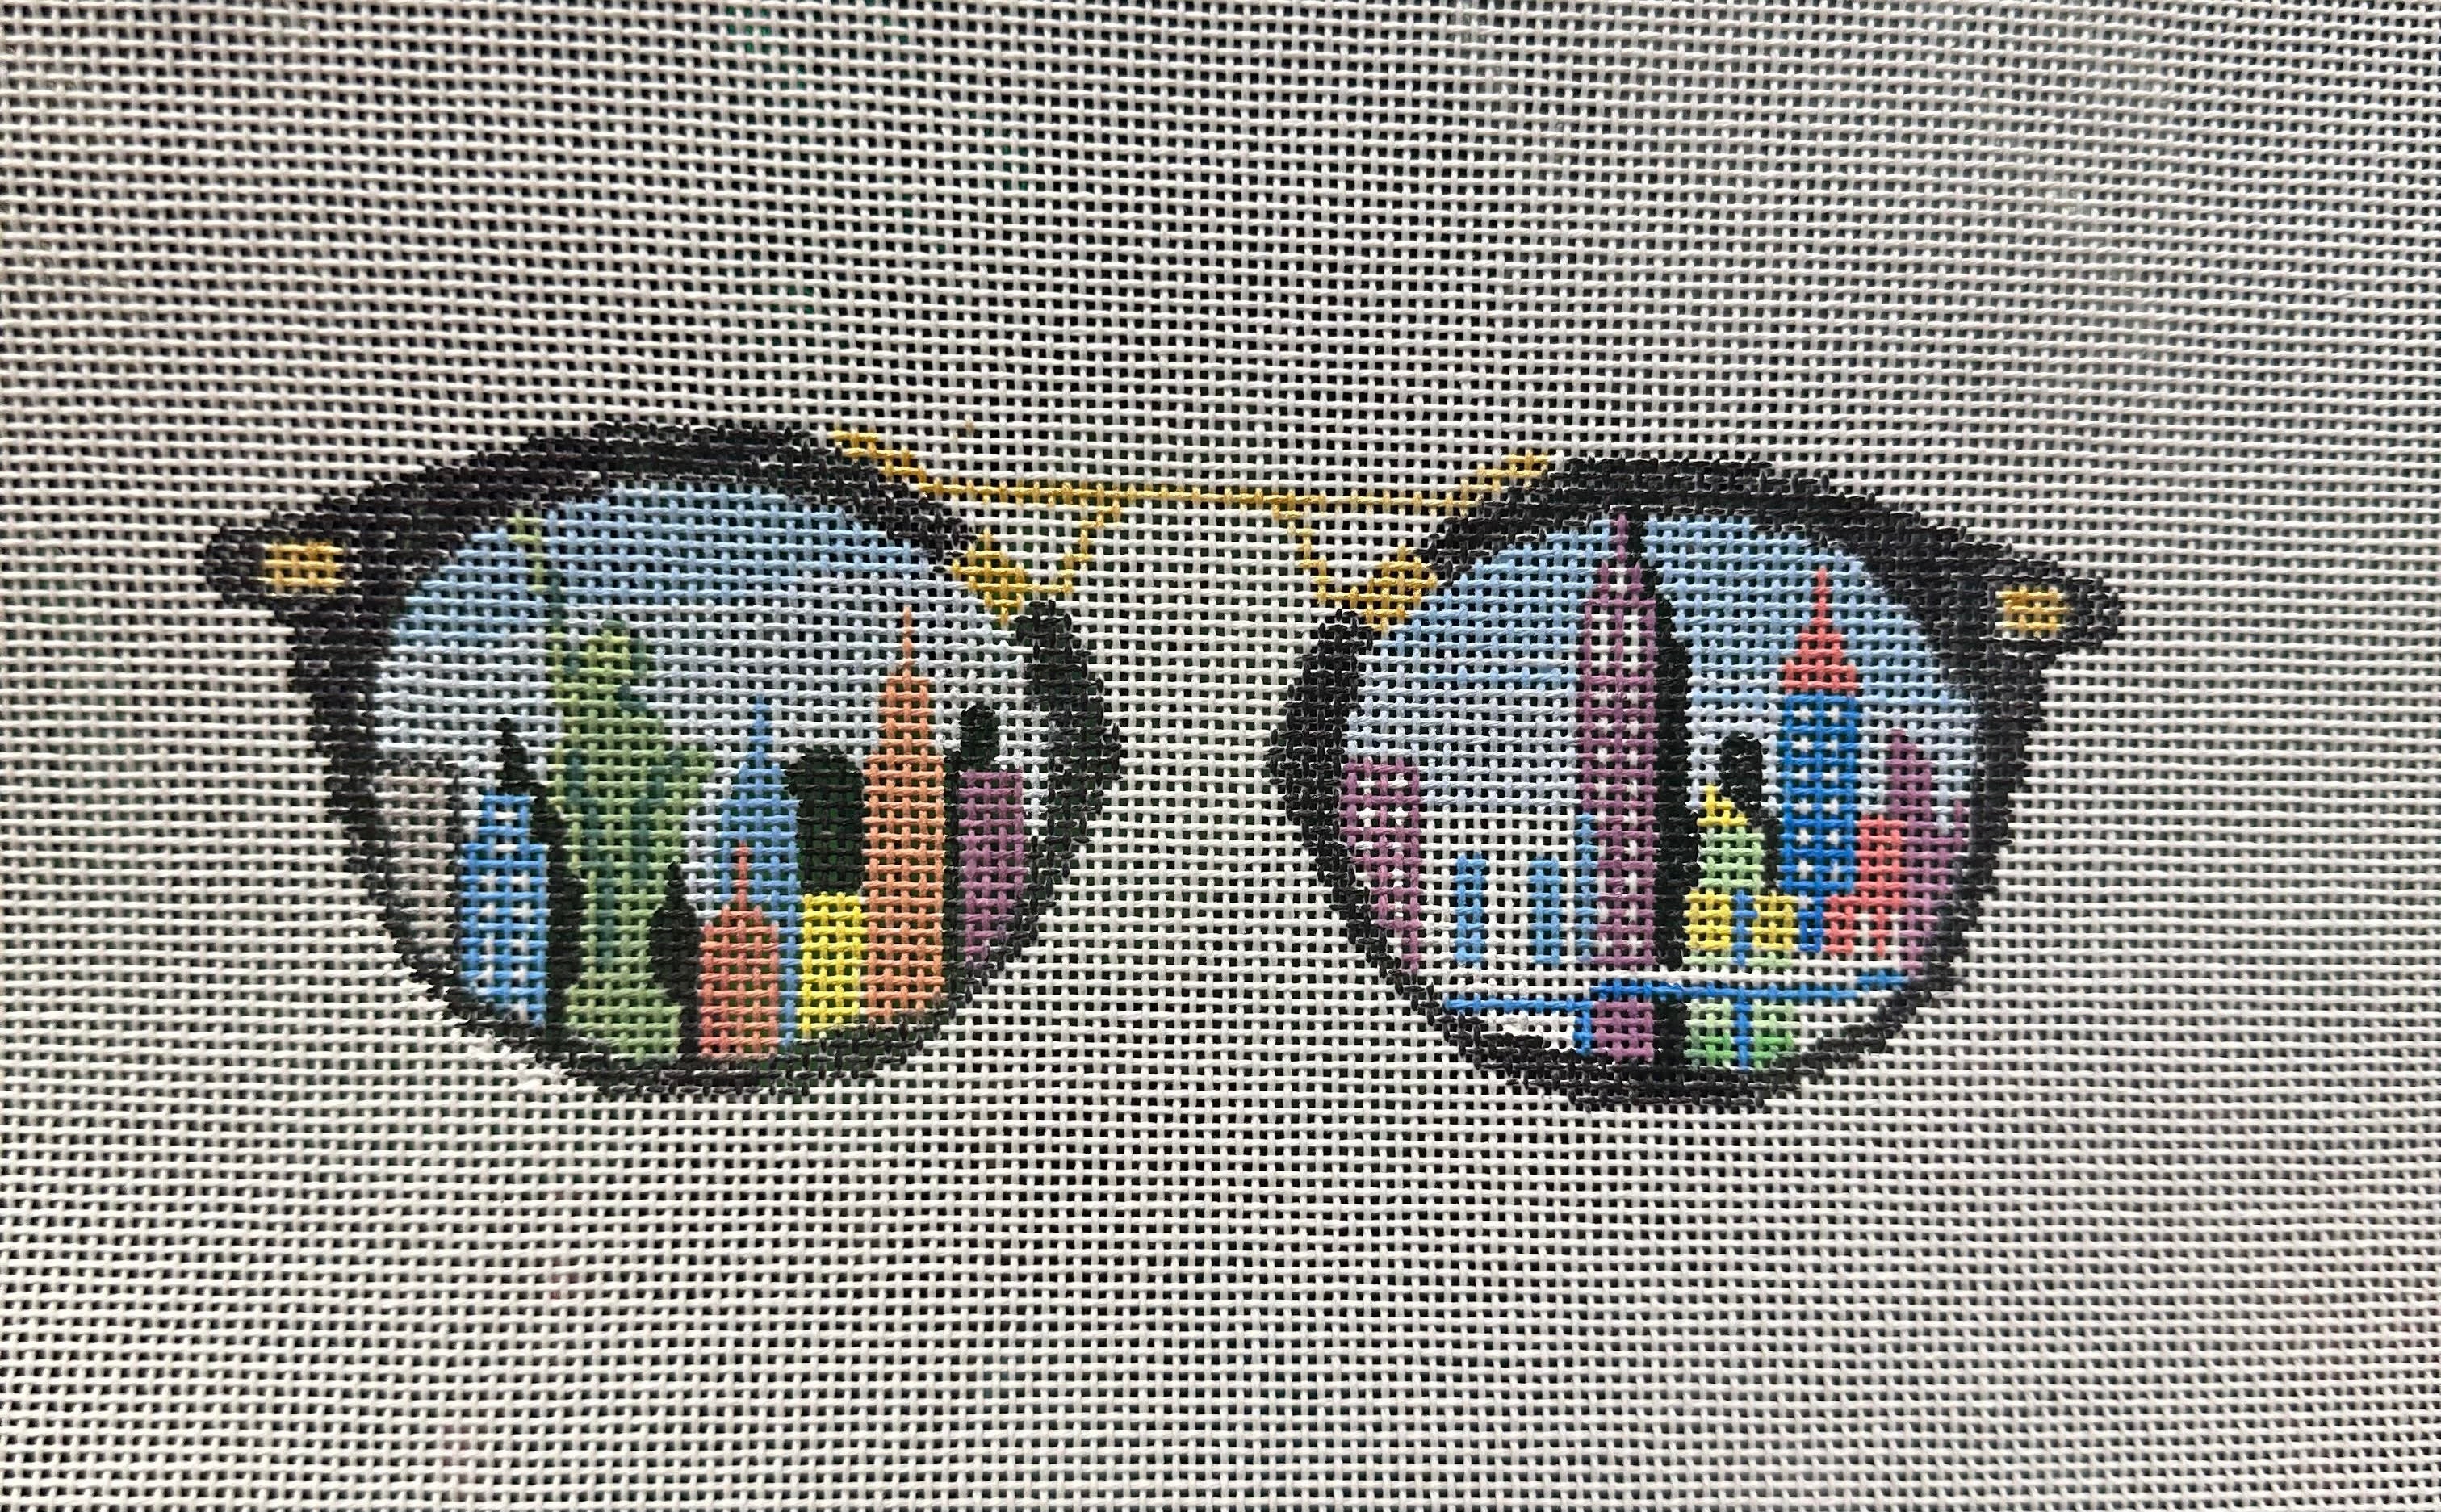 Stitch by Stitch Exclusive NYC eyeglass case